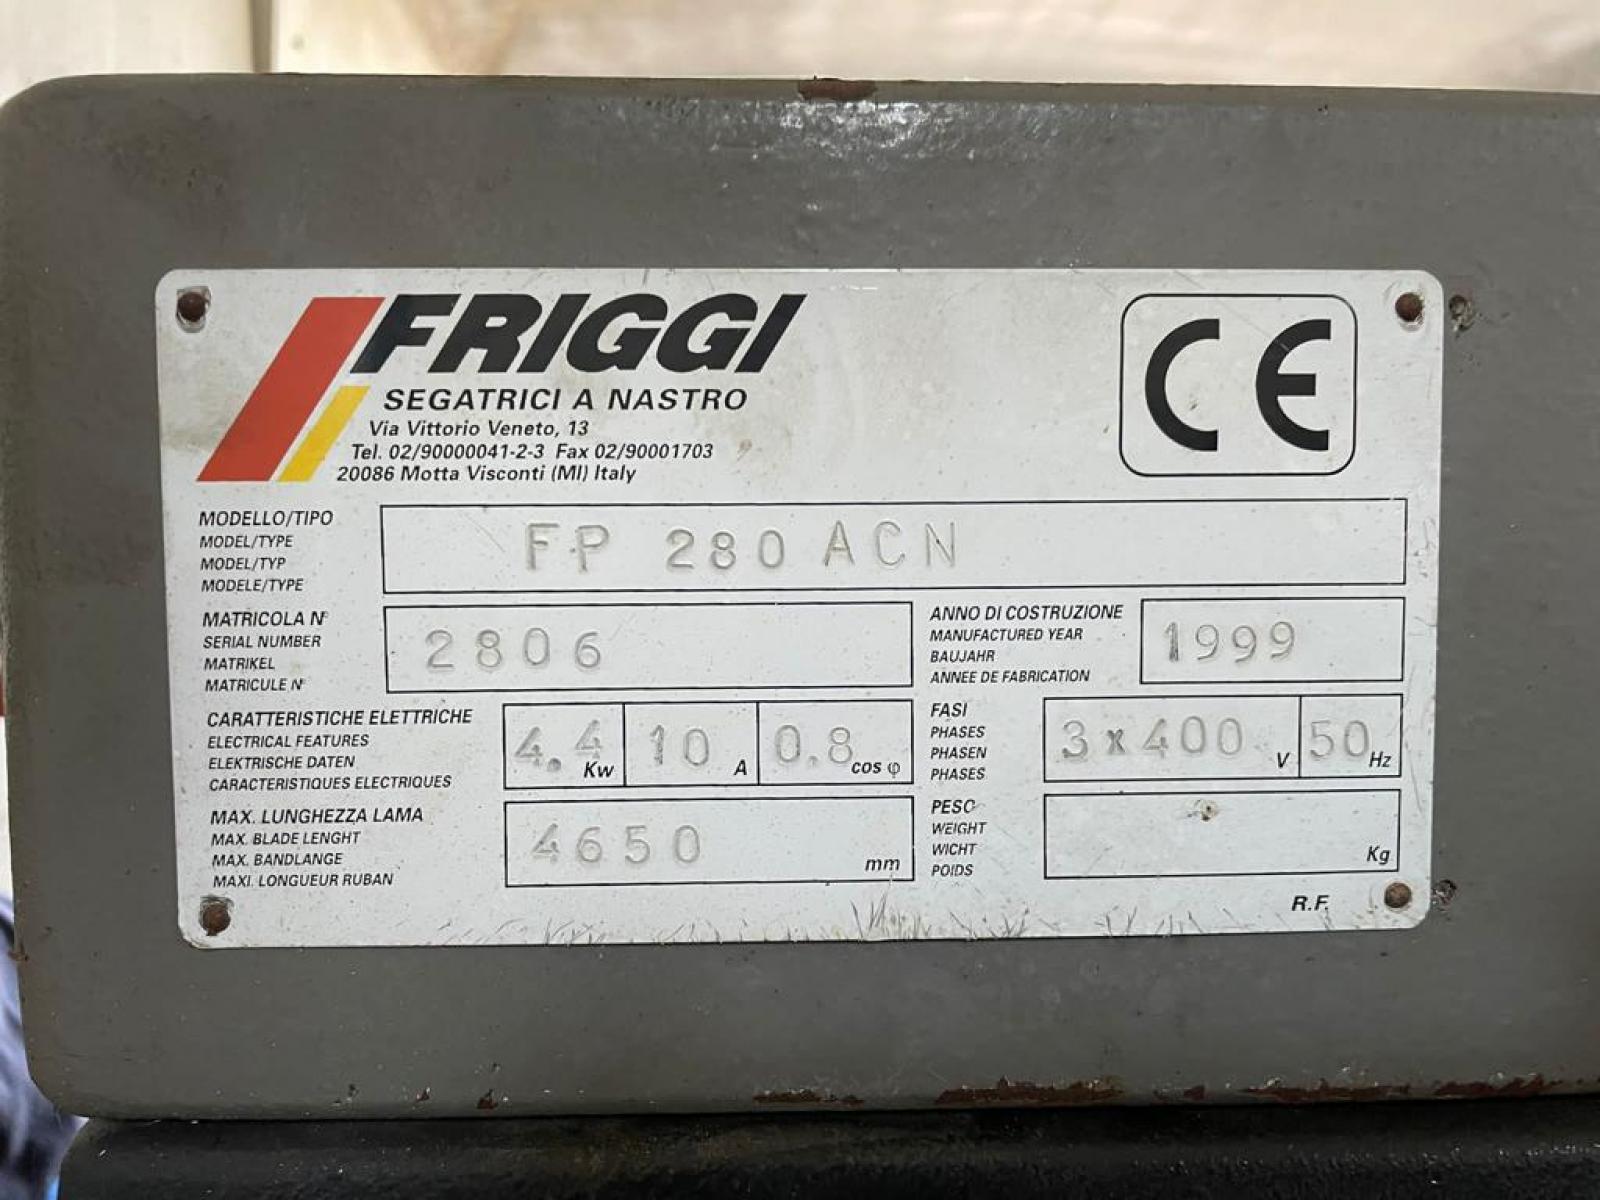 SEGATRICE FRIGGI  FP 280 A CN ANNO 1999